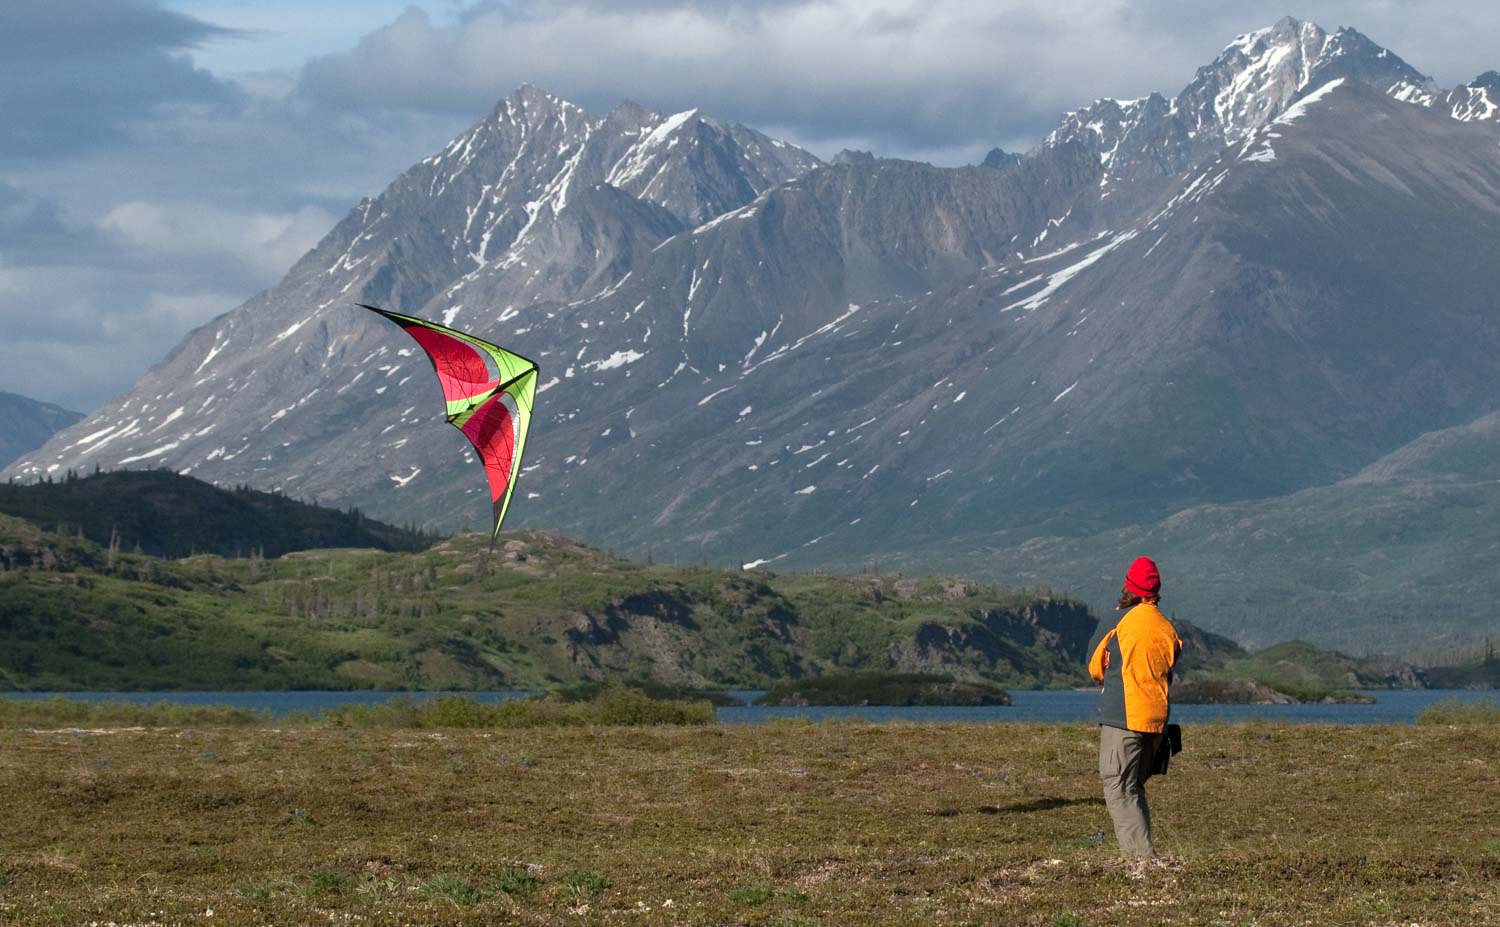 Prism Kite Technology - Quantum Sport Kite 2.0